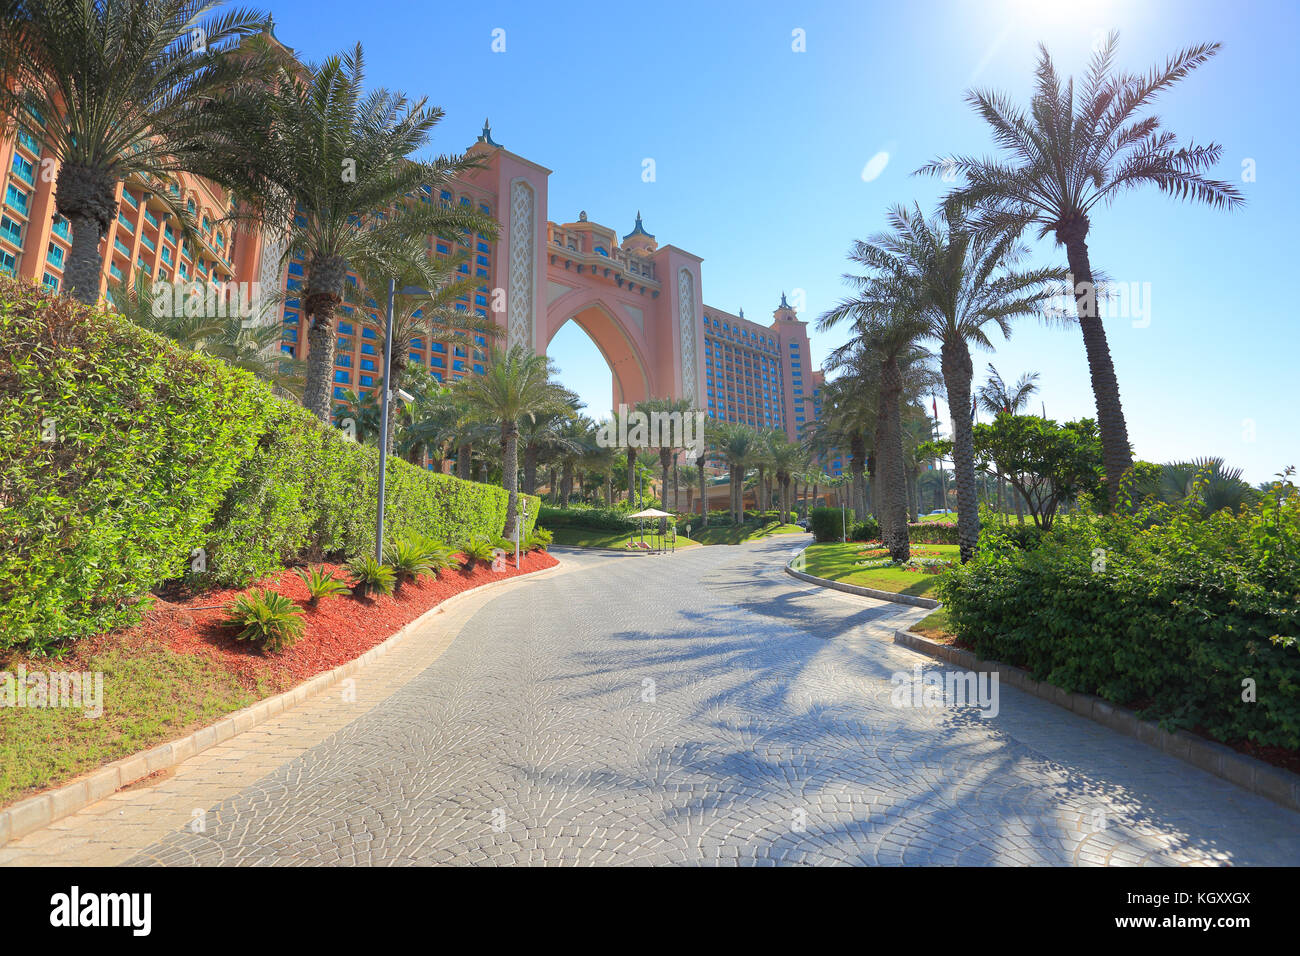 Luxury resort hotel on Palm island in Dubai. Stock Photo